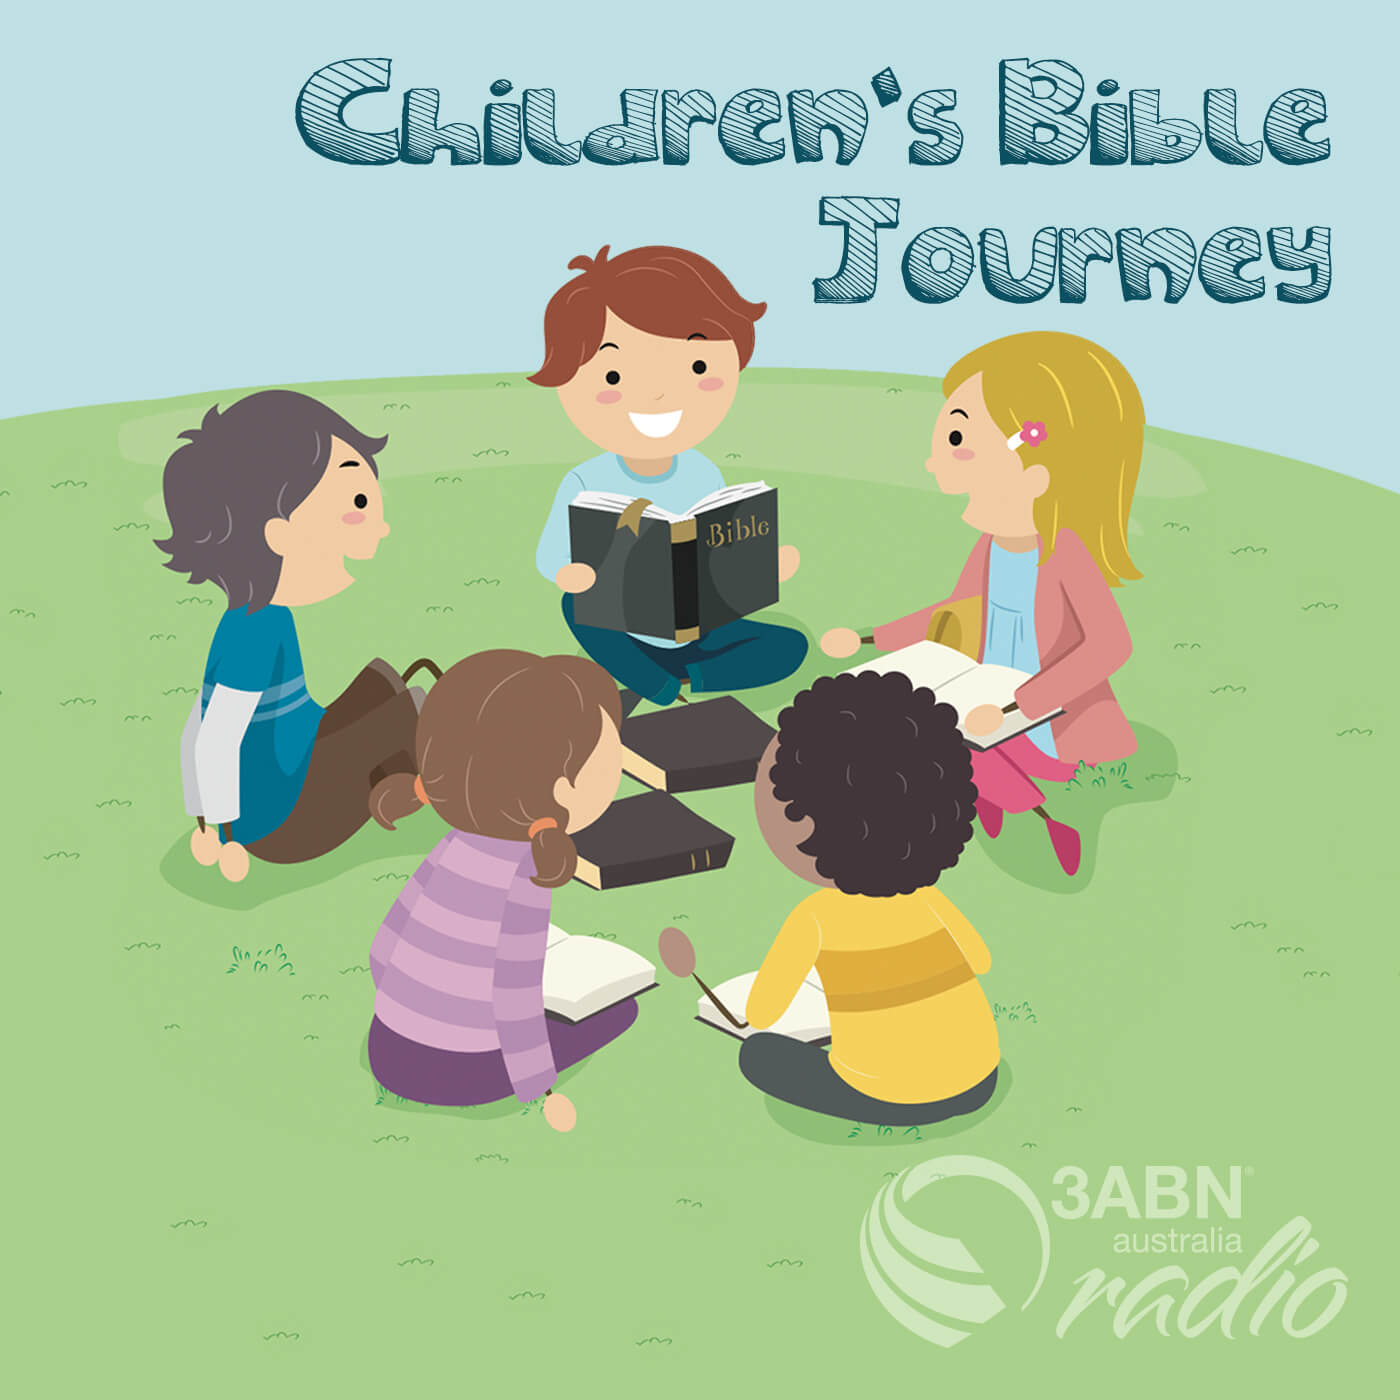 Children's Bible Journey - 2186